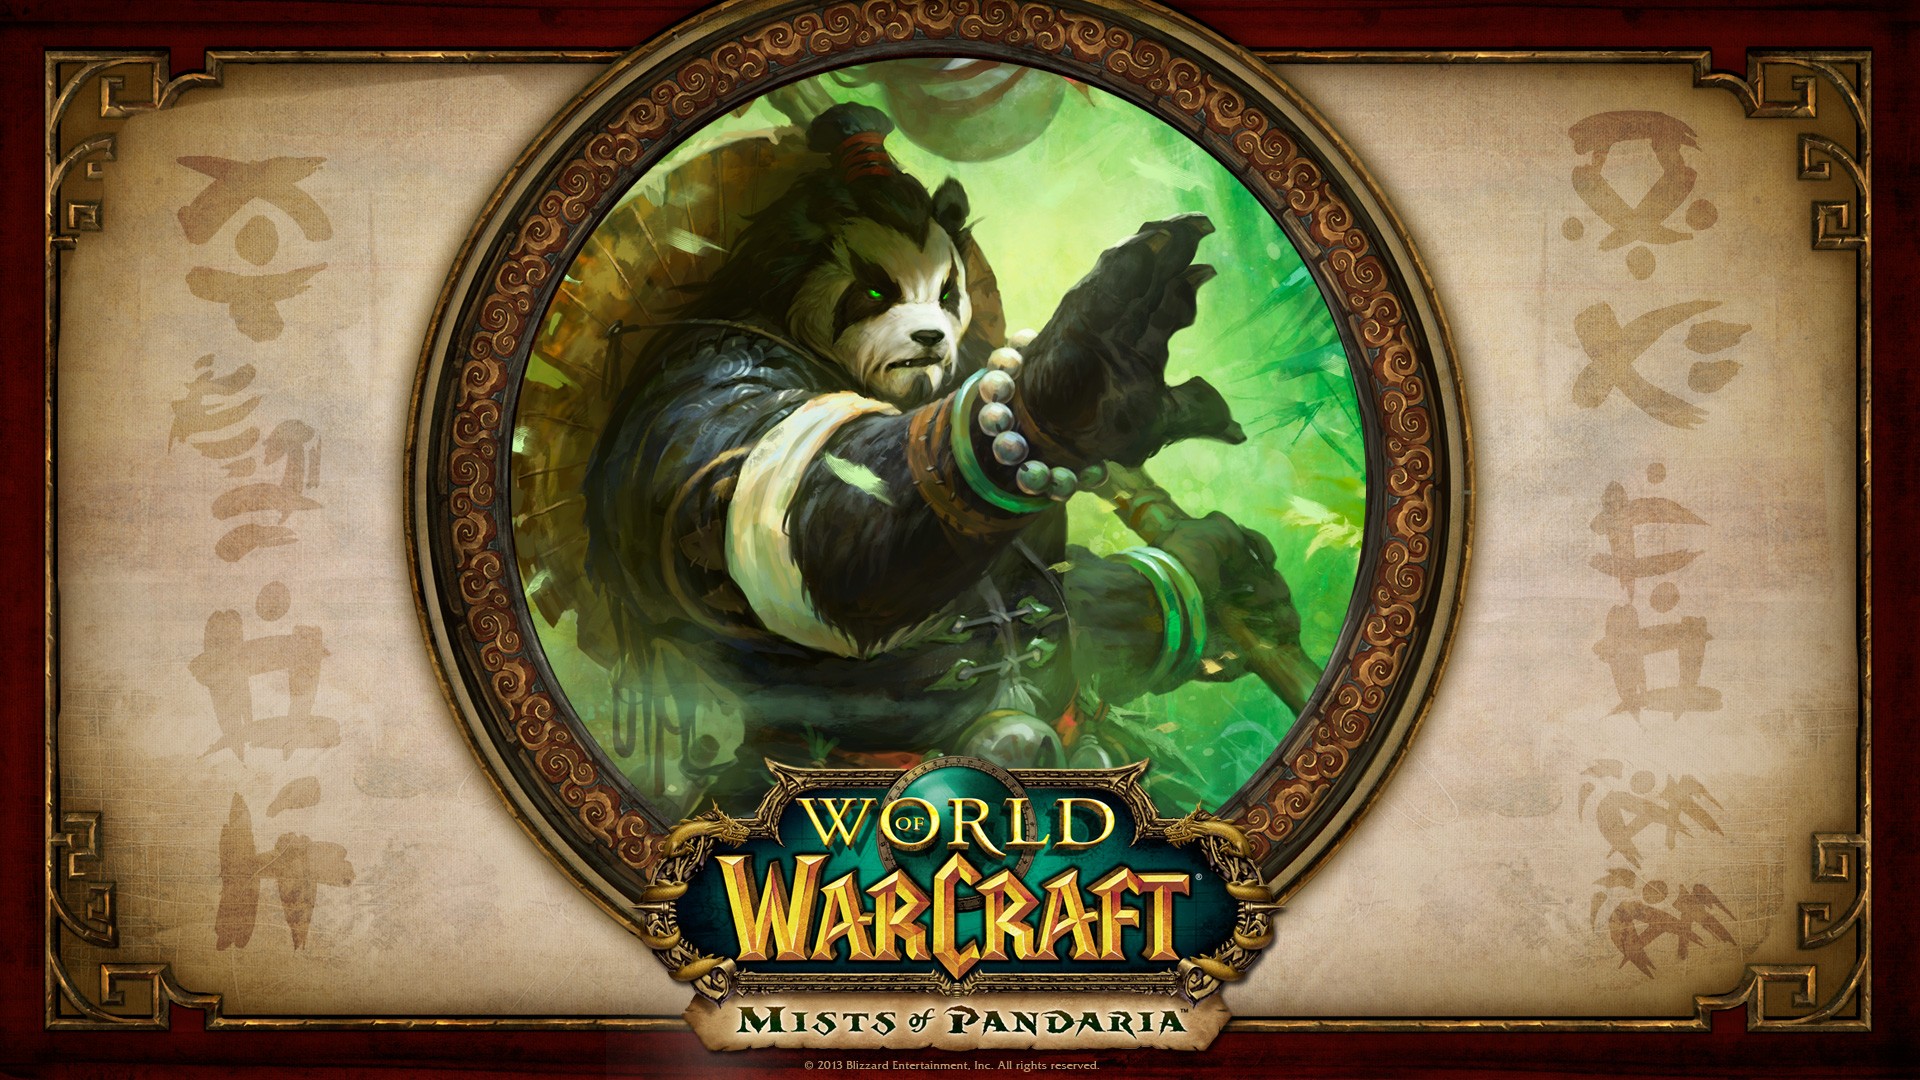 General 1920x1080 World of Warcraft World of Warcraft: Mists of Pandaria PC gaming glowing eyes panda 2013 (Year) Blizzard Entertainment